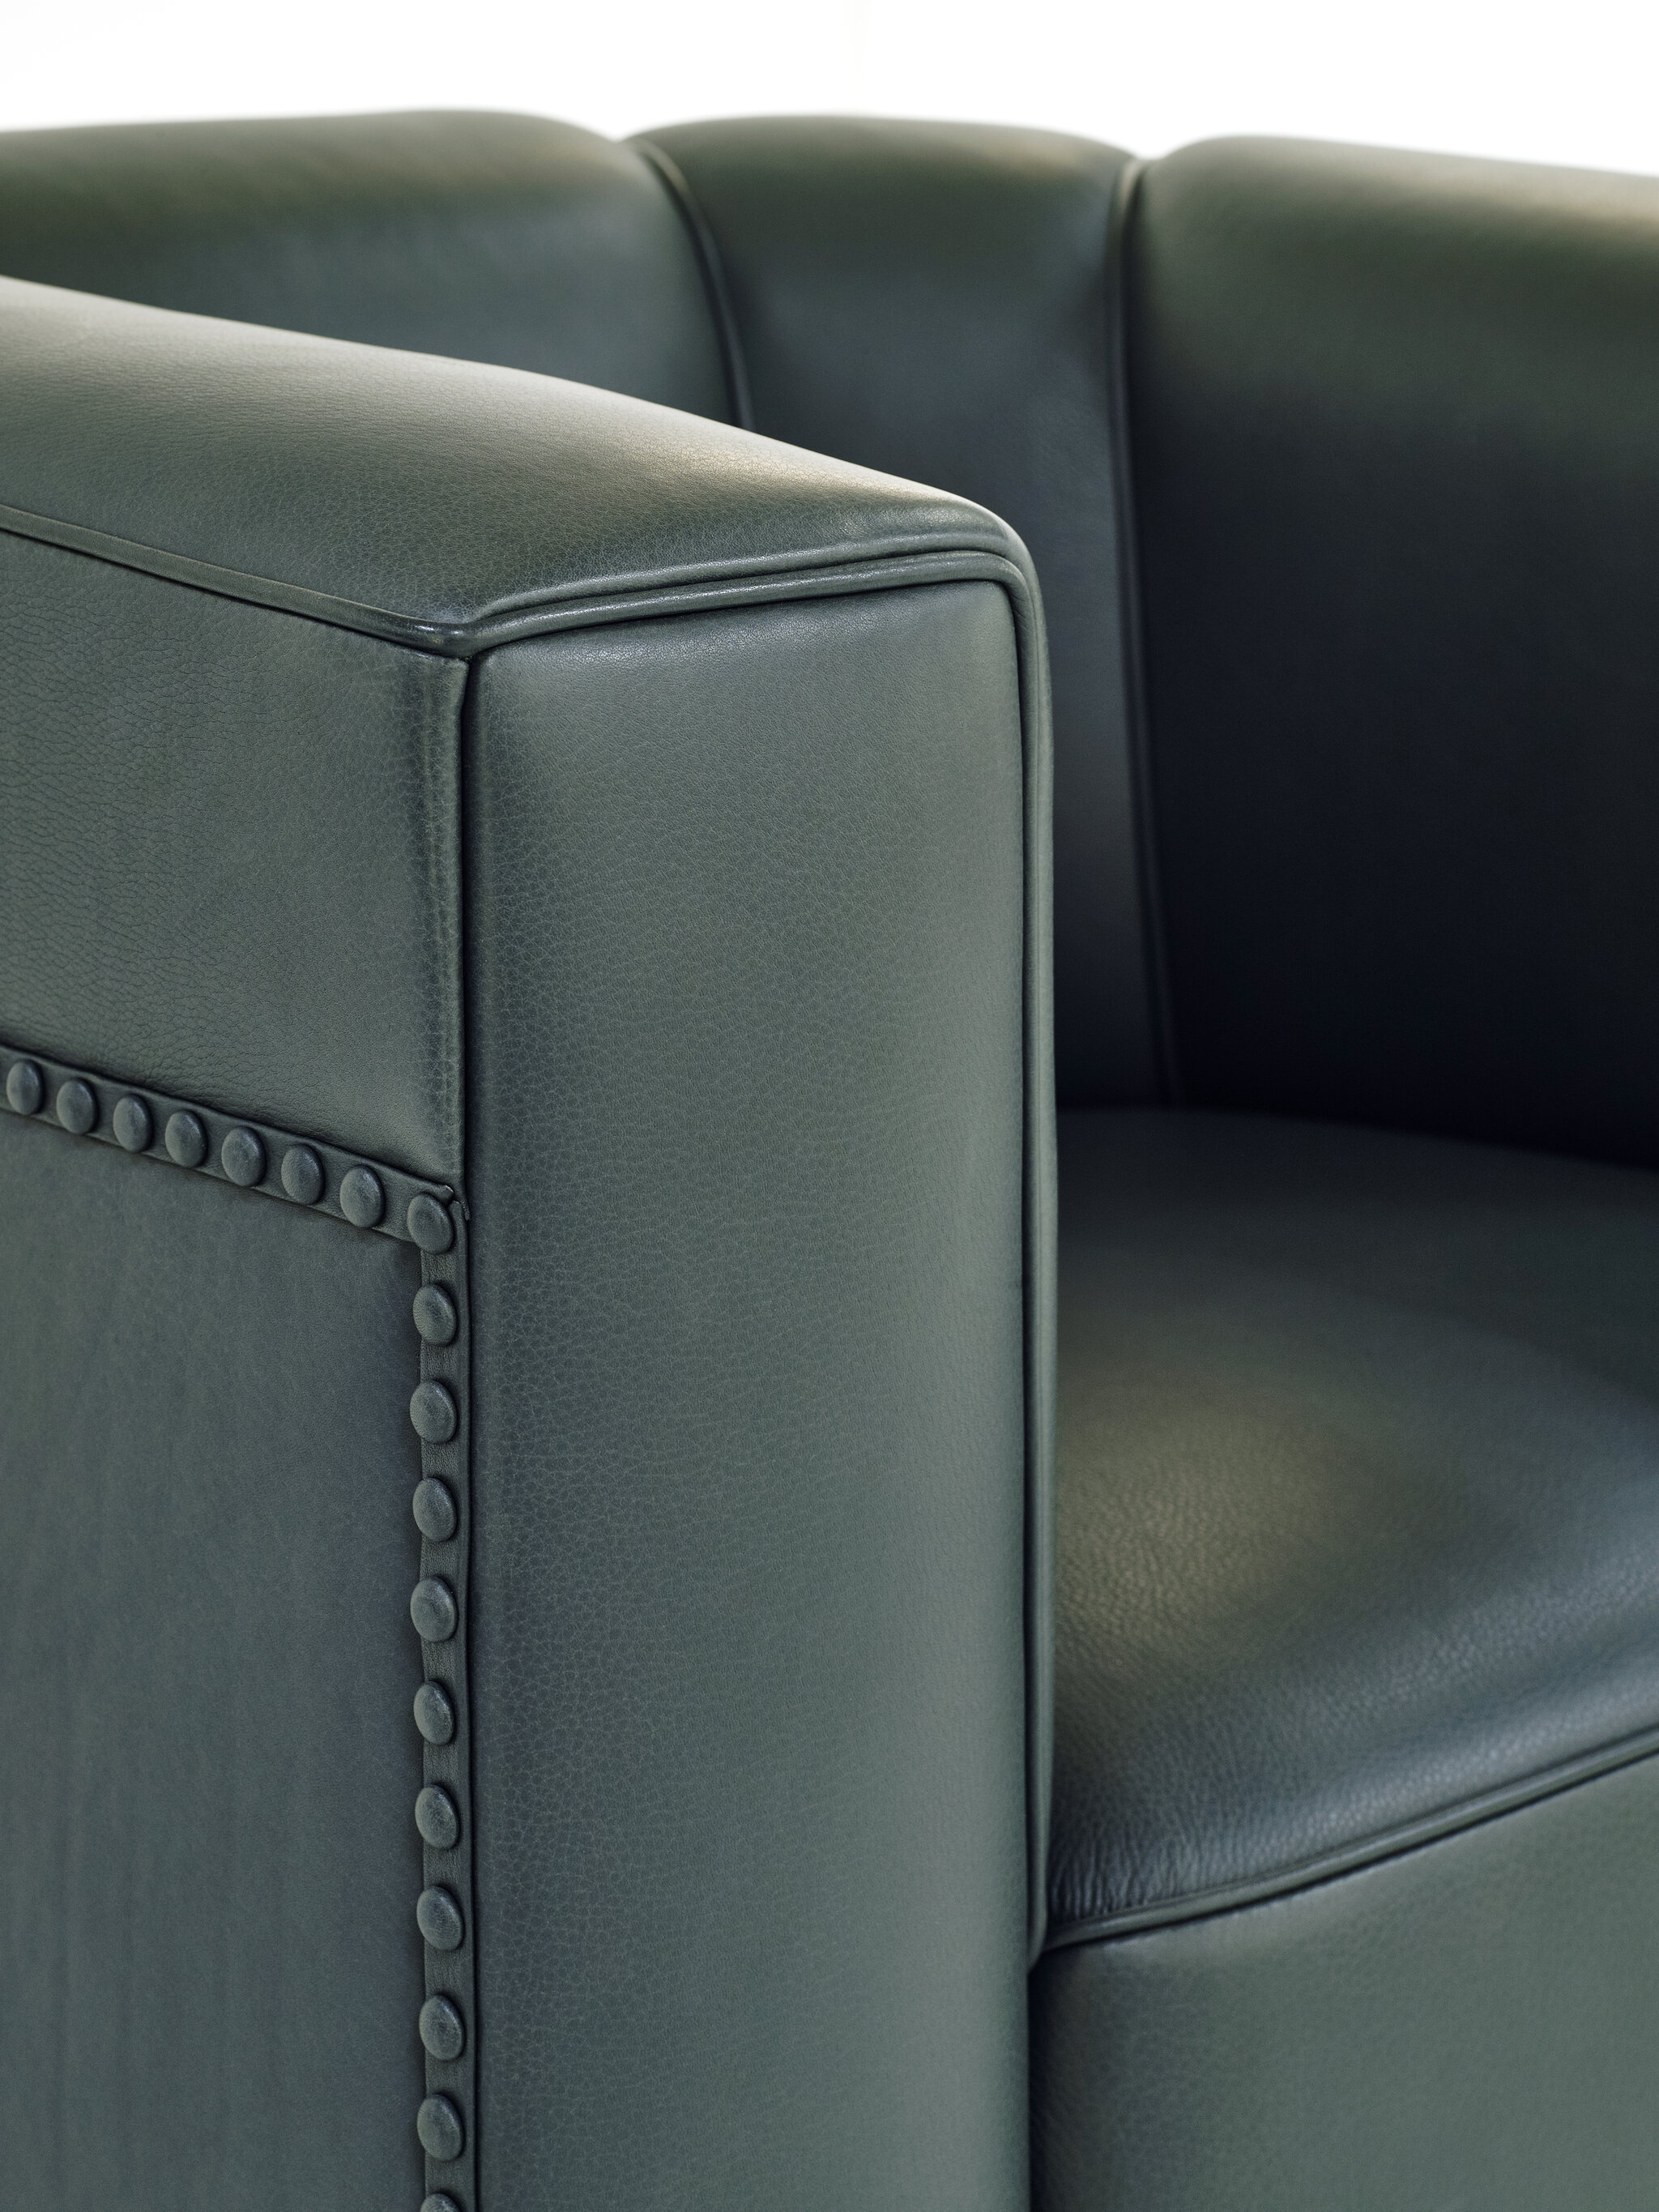 armrest detail of a black Palais Stoclet leather armchair